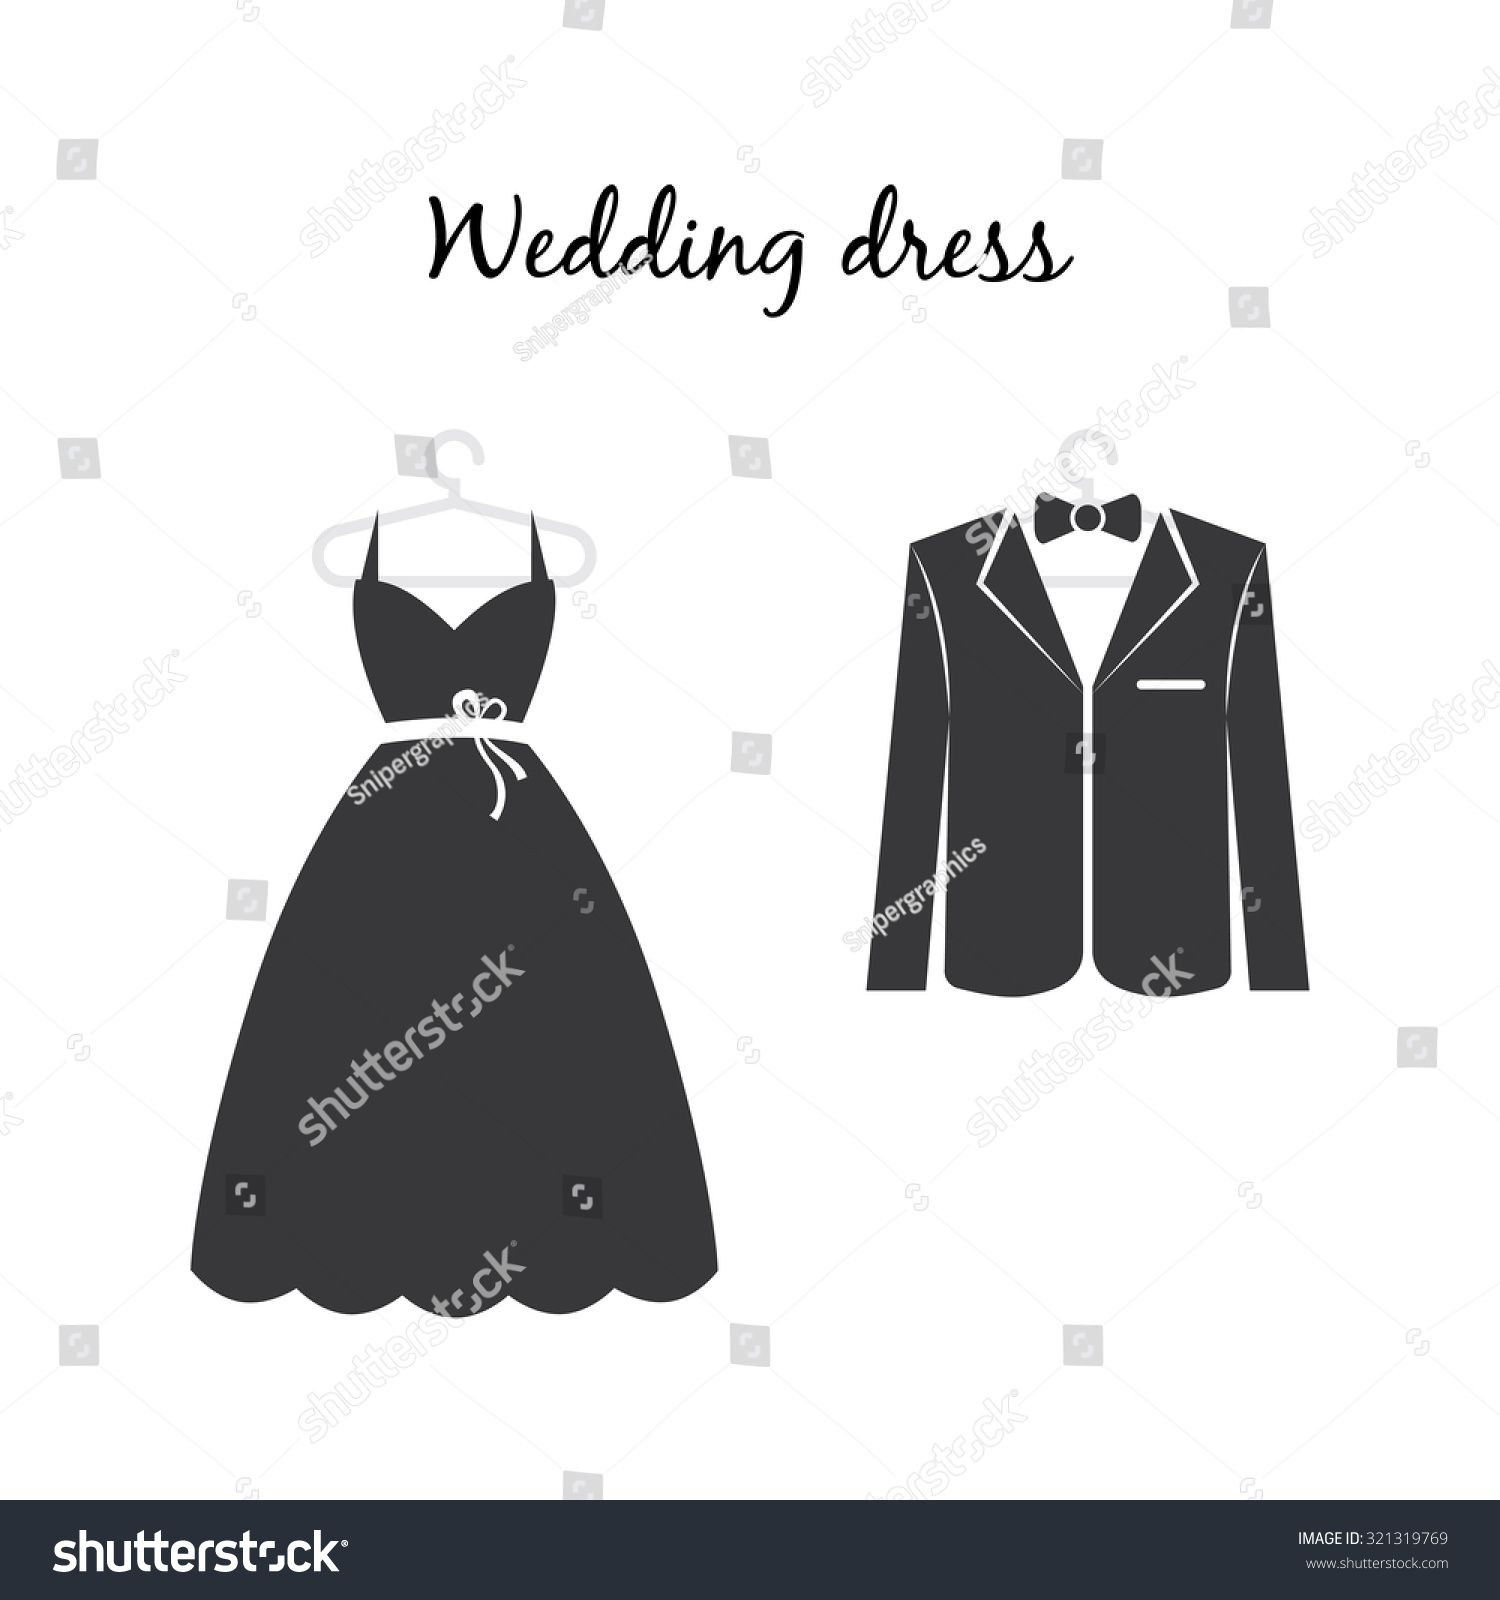 Wedding Dress Vector Stock Vector 321319769 - Shutterstock